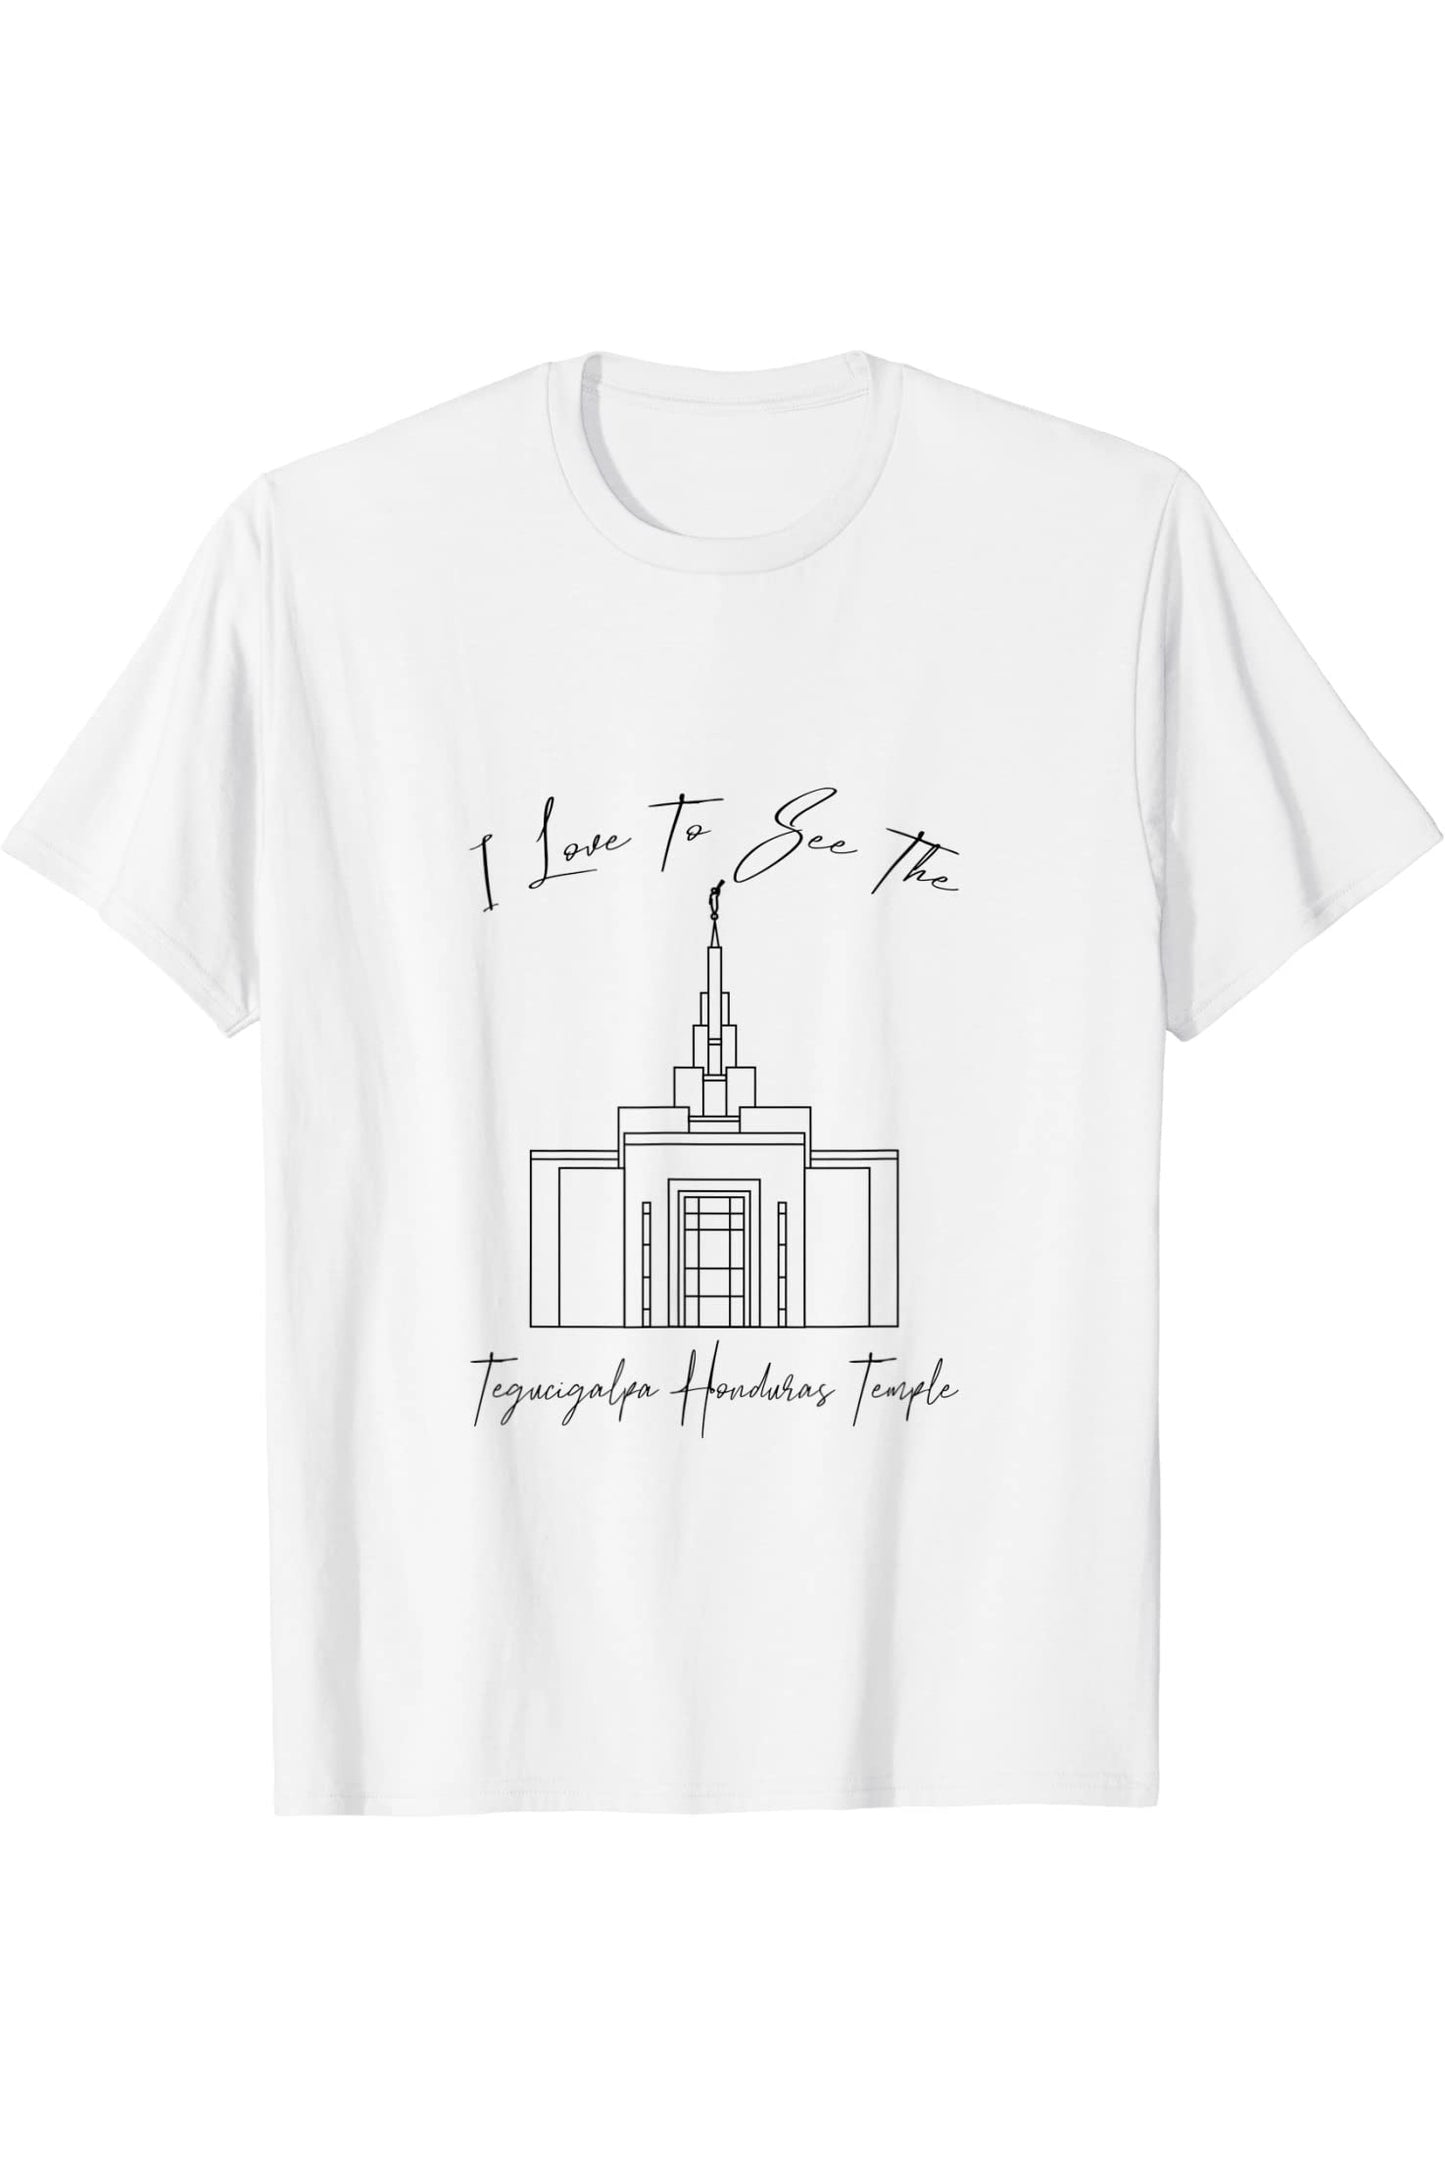 Tegucigalpa Honduras Temple T-Shirt - Calligraphy Style (English) US